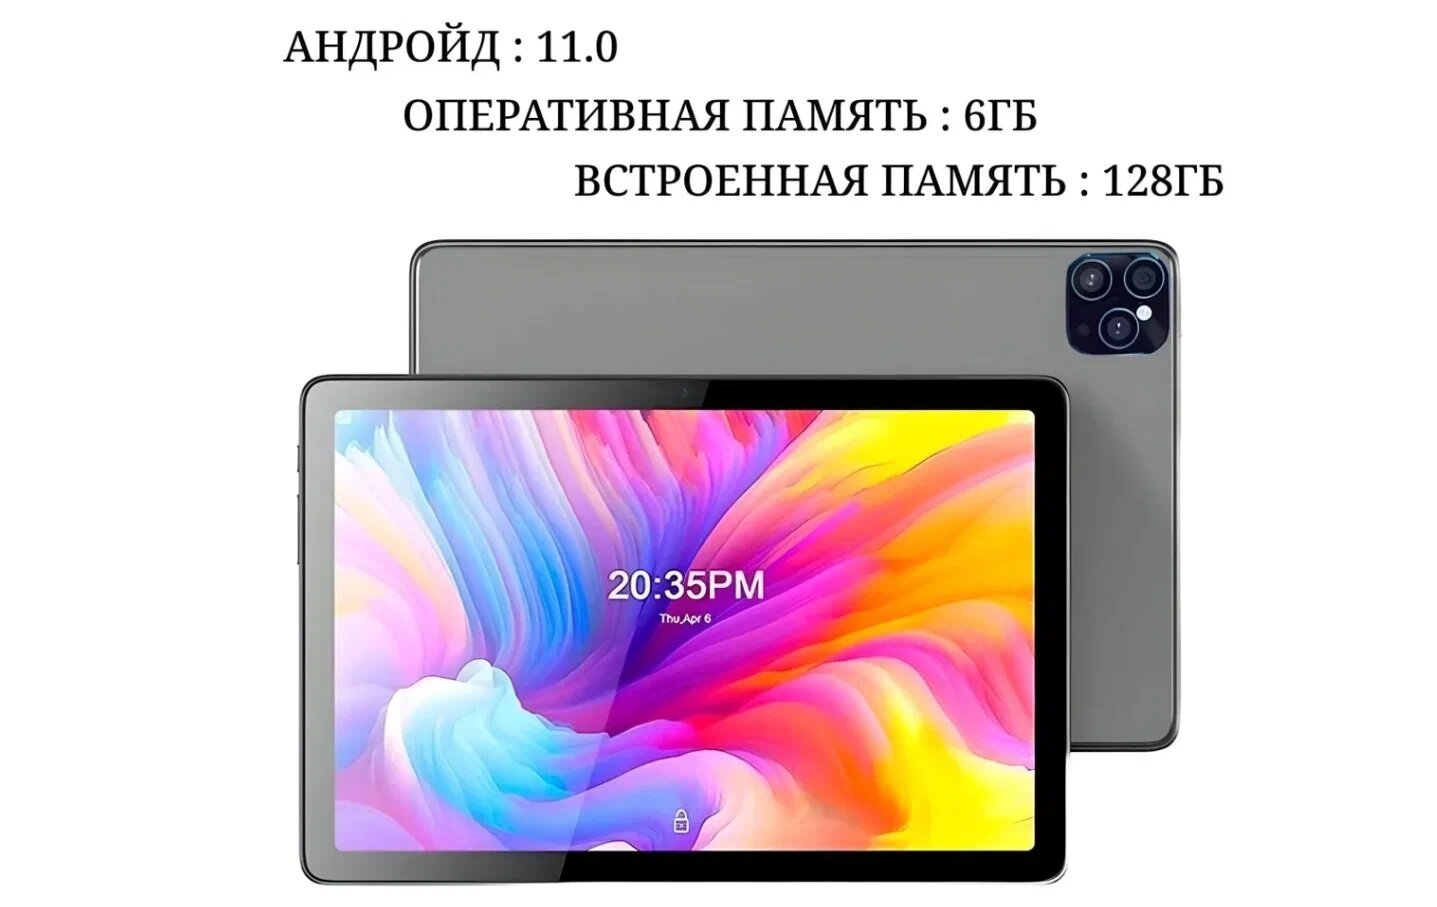 Планшет Umiio Smart Tablet PC A10 Pro Grey